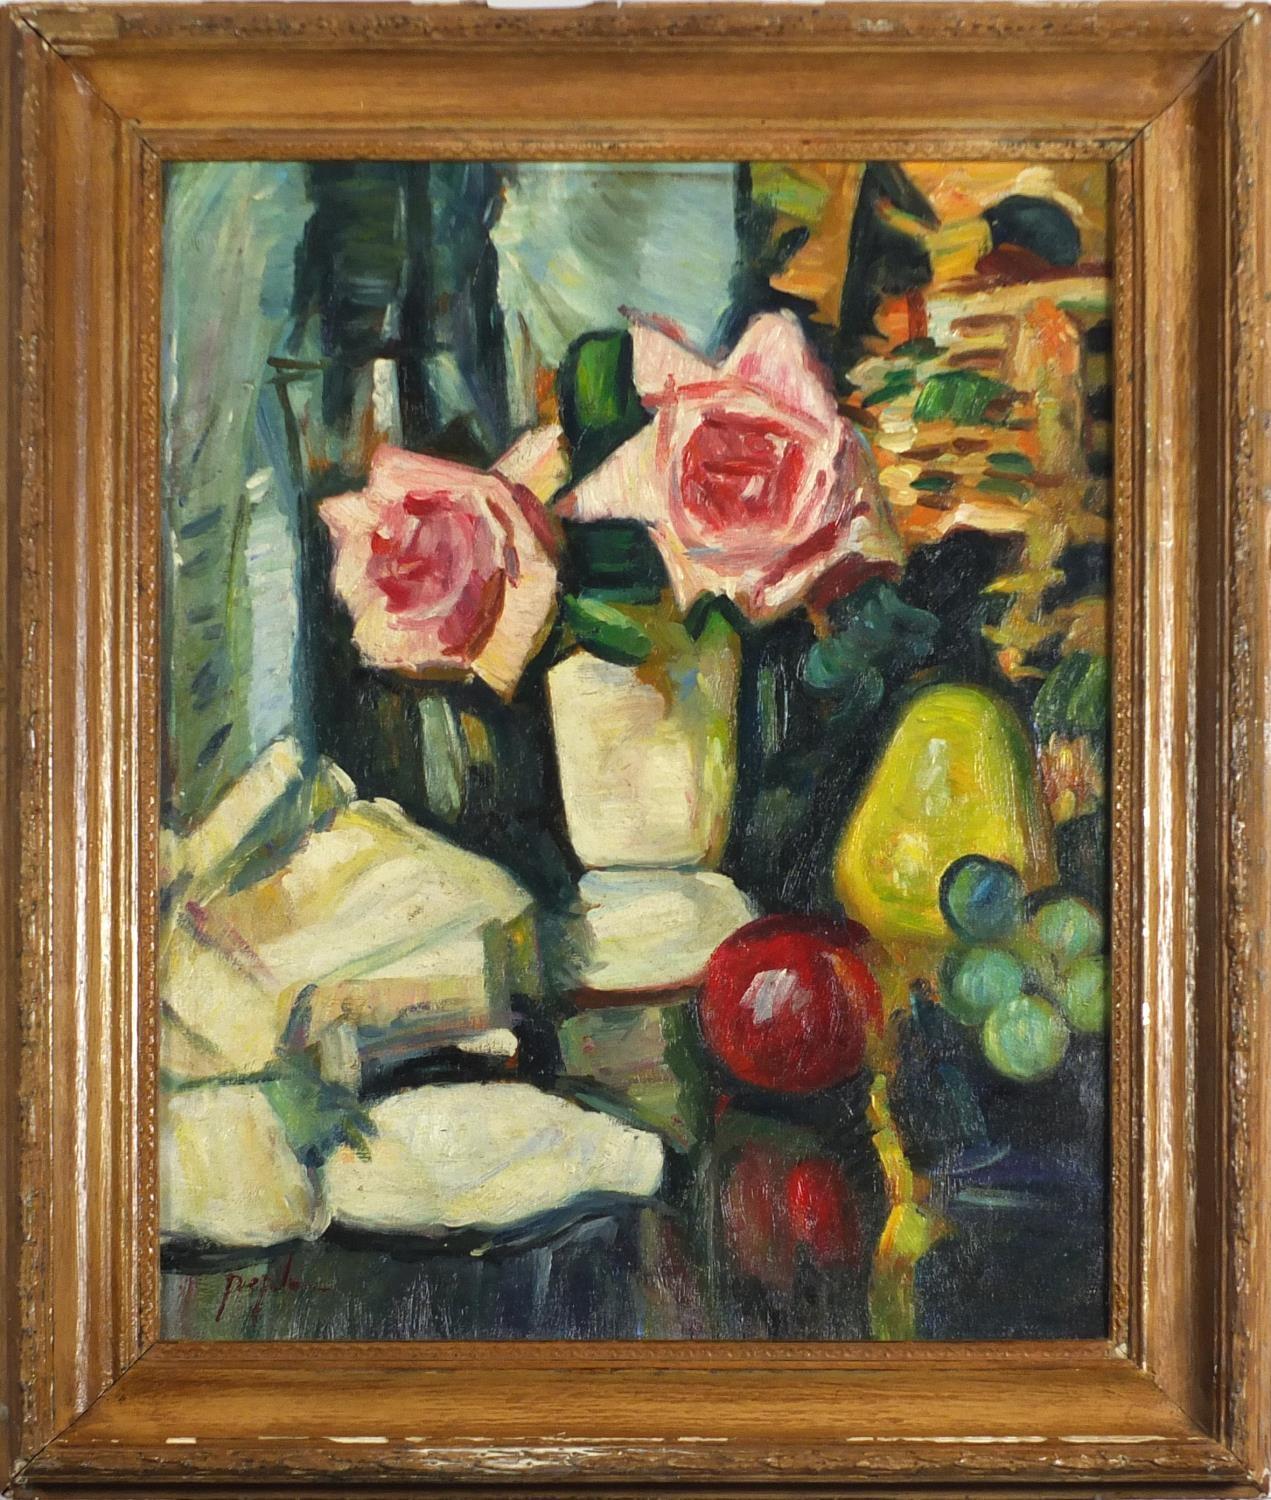 Still life flowers and fruit, Scottish colourist school, oil on board, framed, 41.5cm x 39.5cm : For - Image 2 of 4